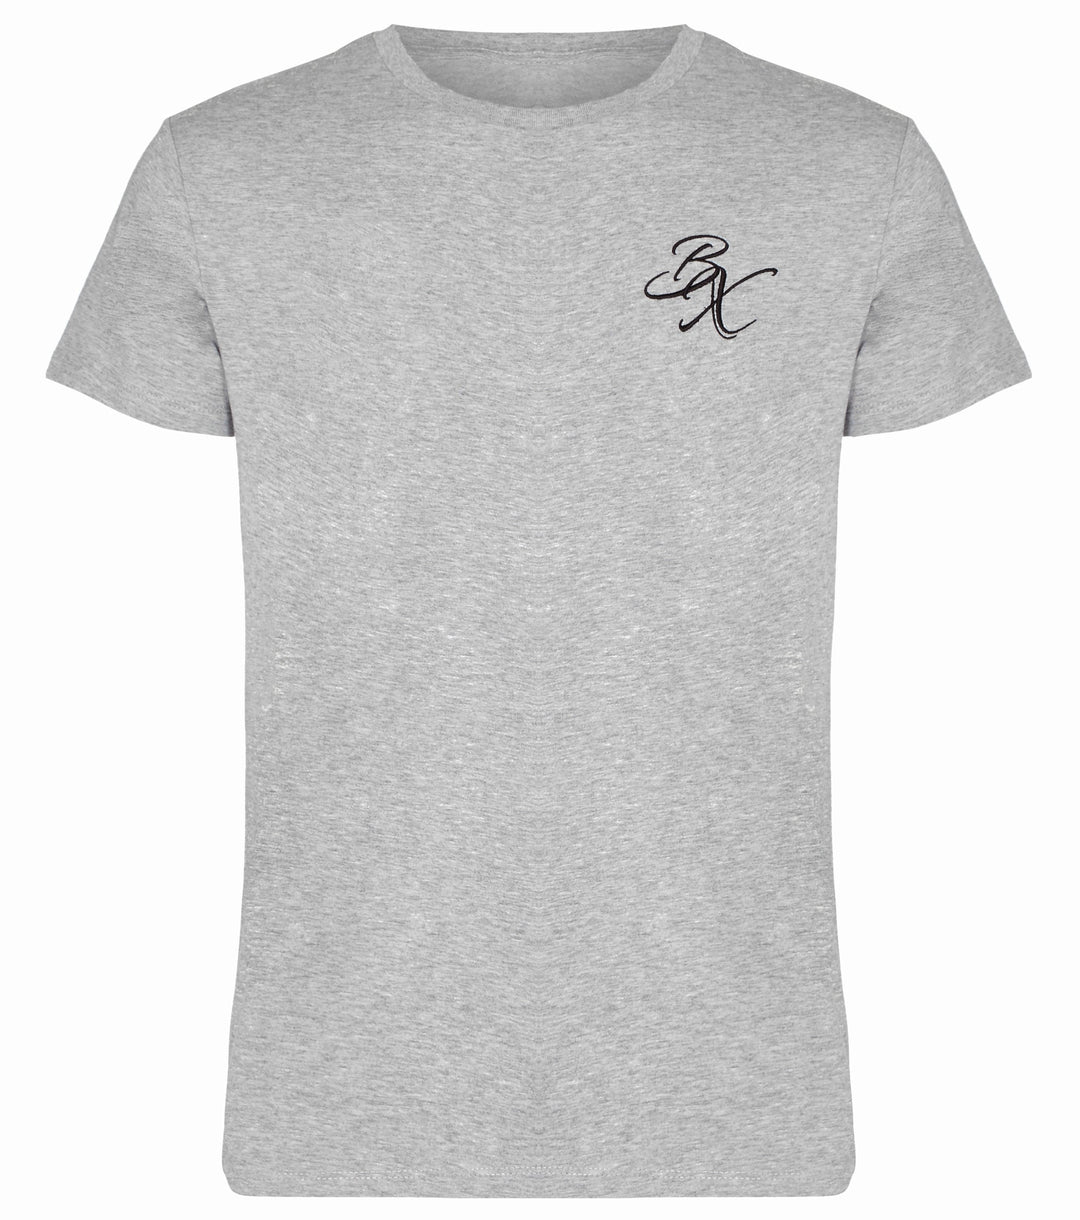 BX Original Regular Fit T-shirt - Heather Grey - Adapt Avenue